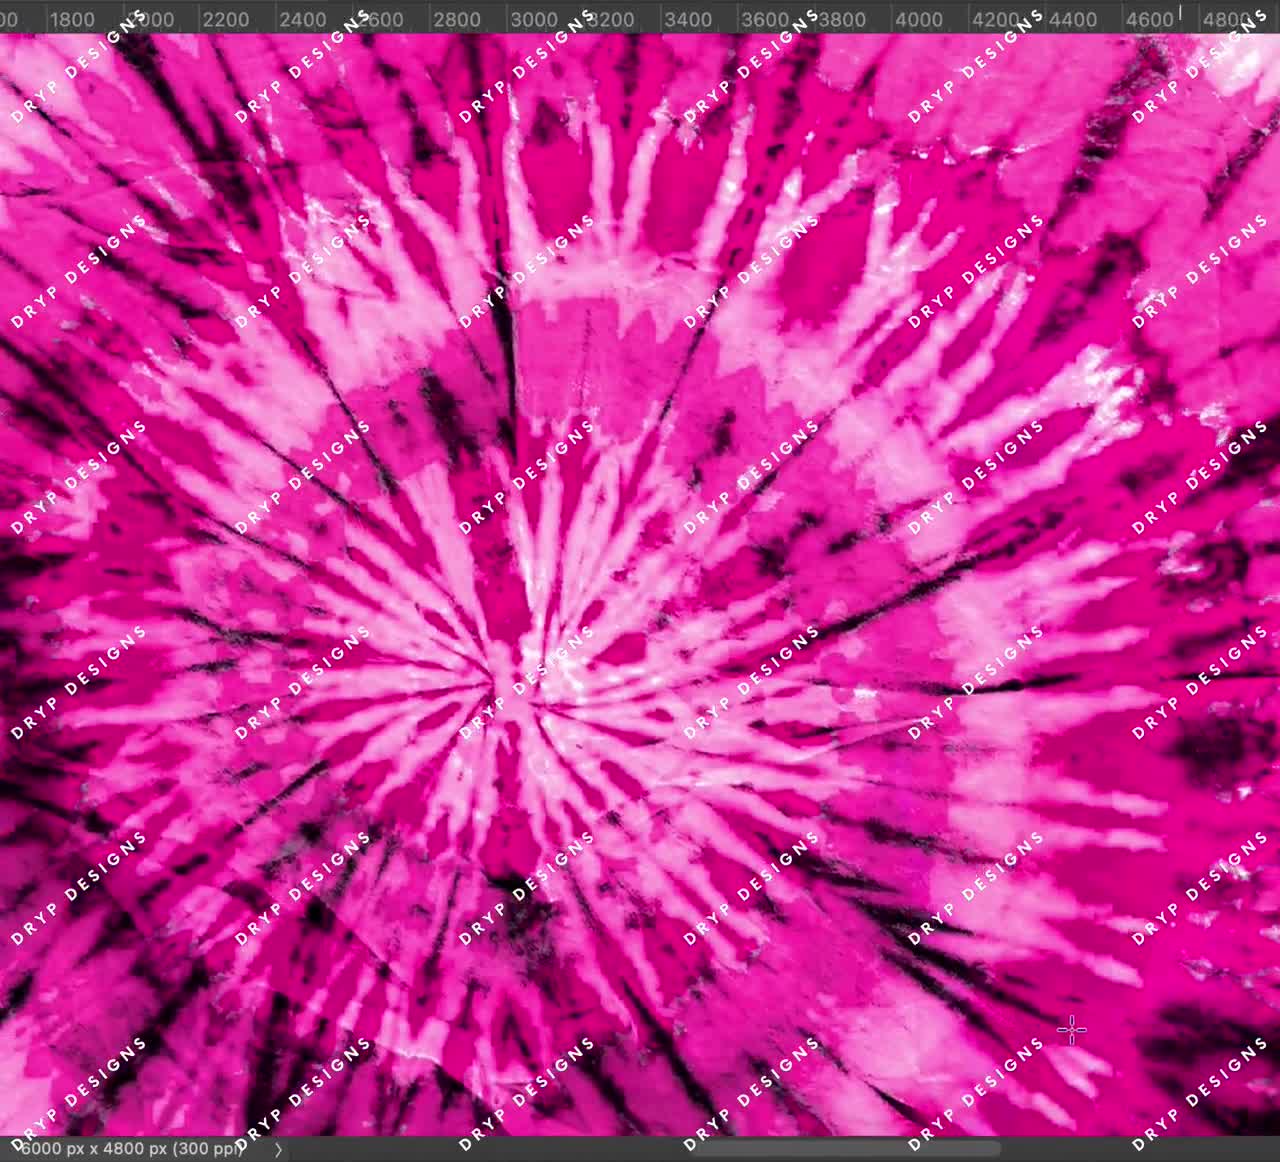 Vibrant Pink Tiedye Digital Paper Background Texture Pink Tie Dye